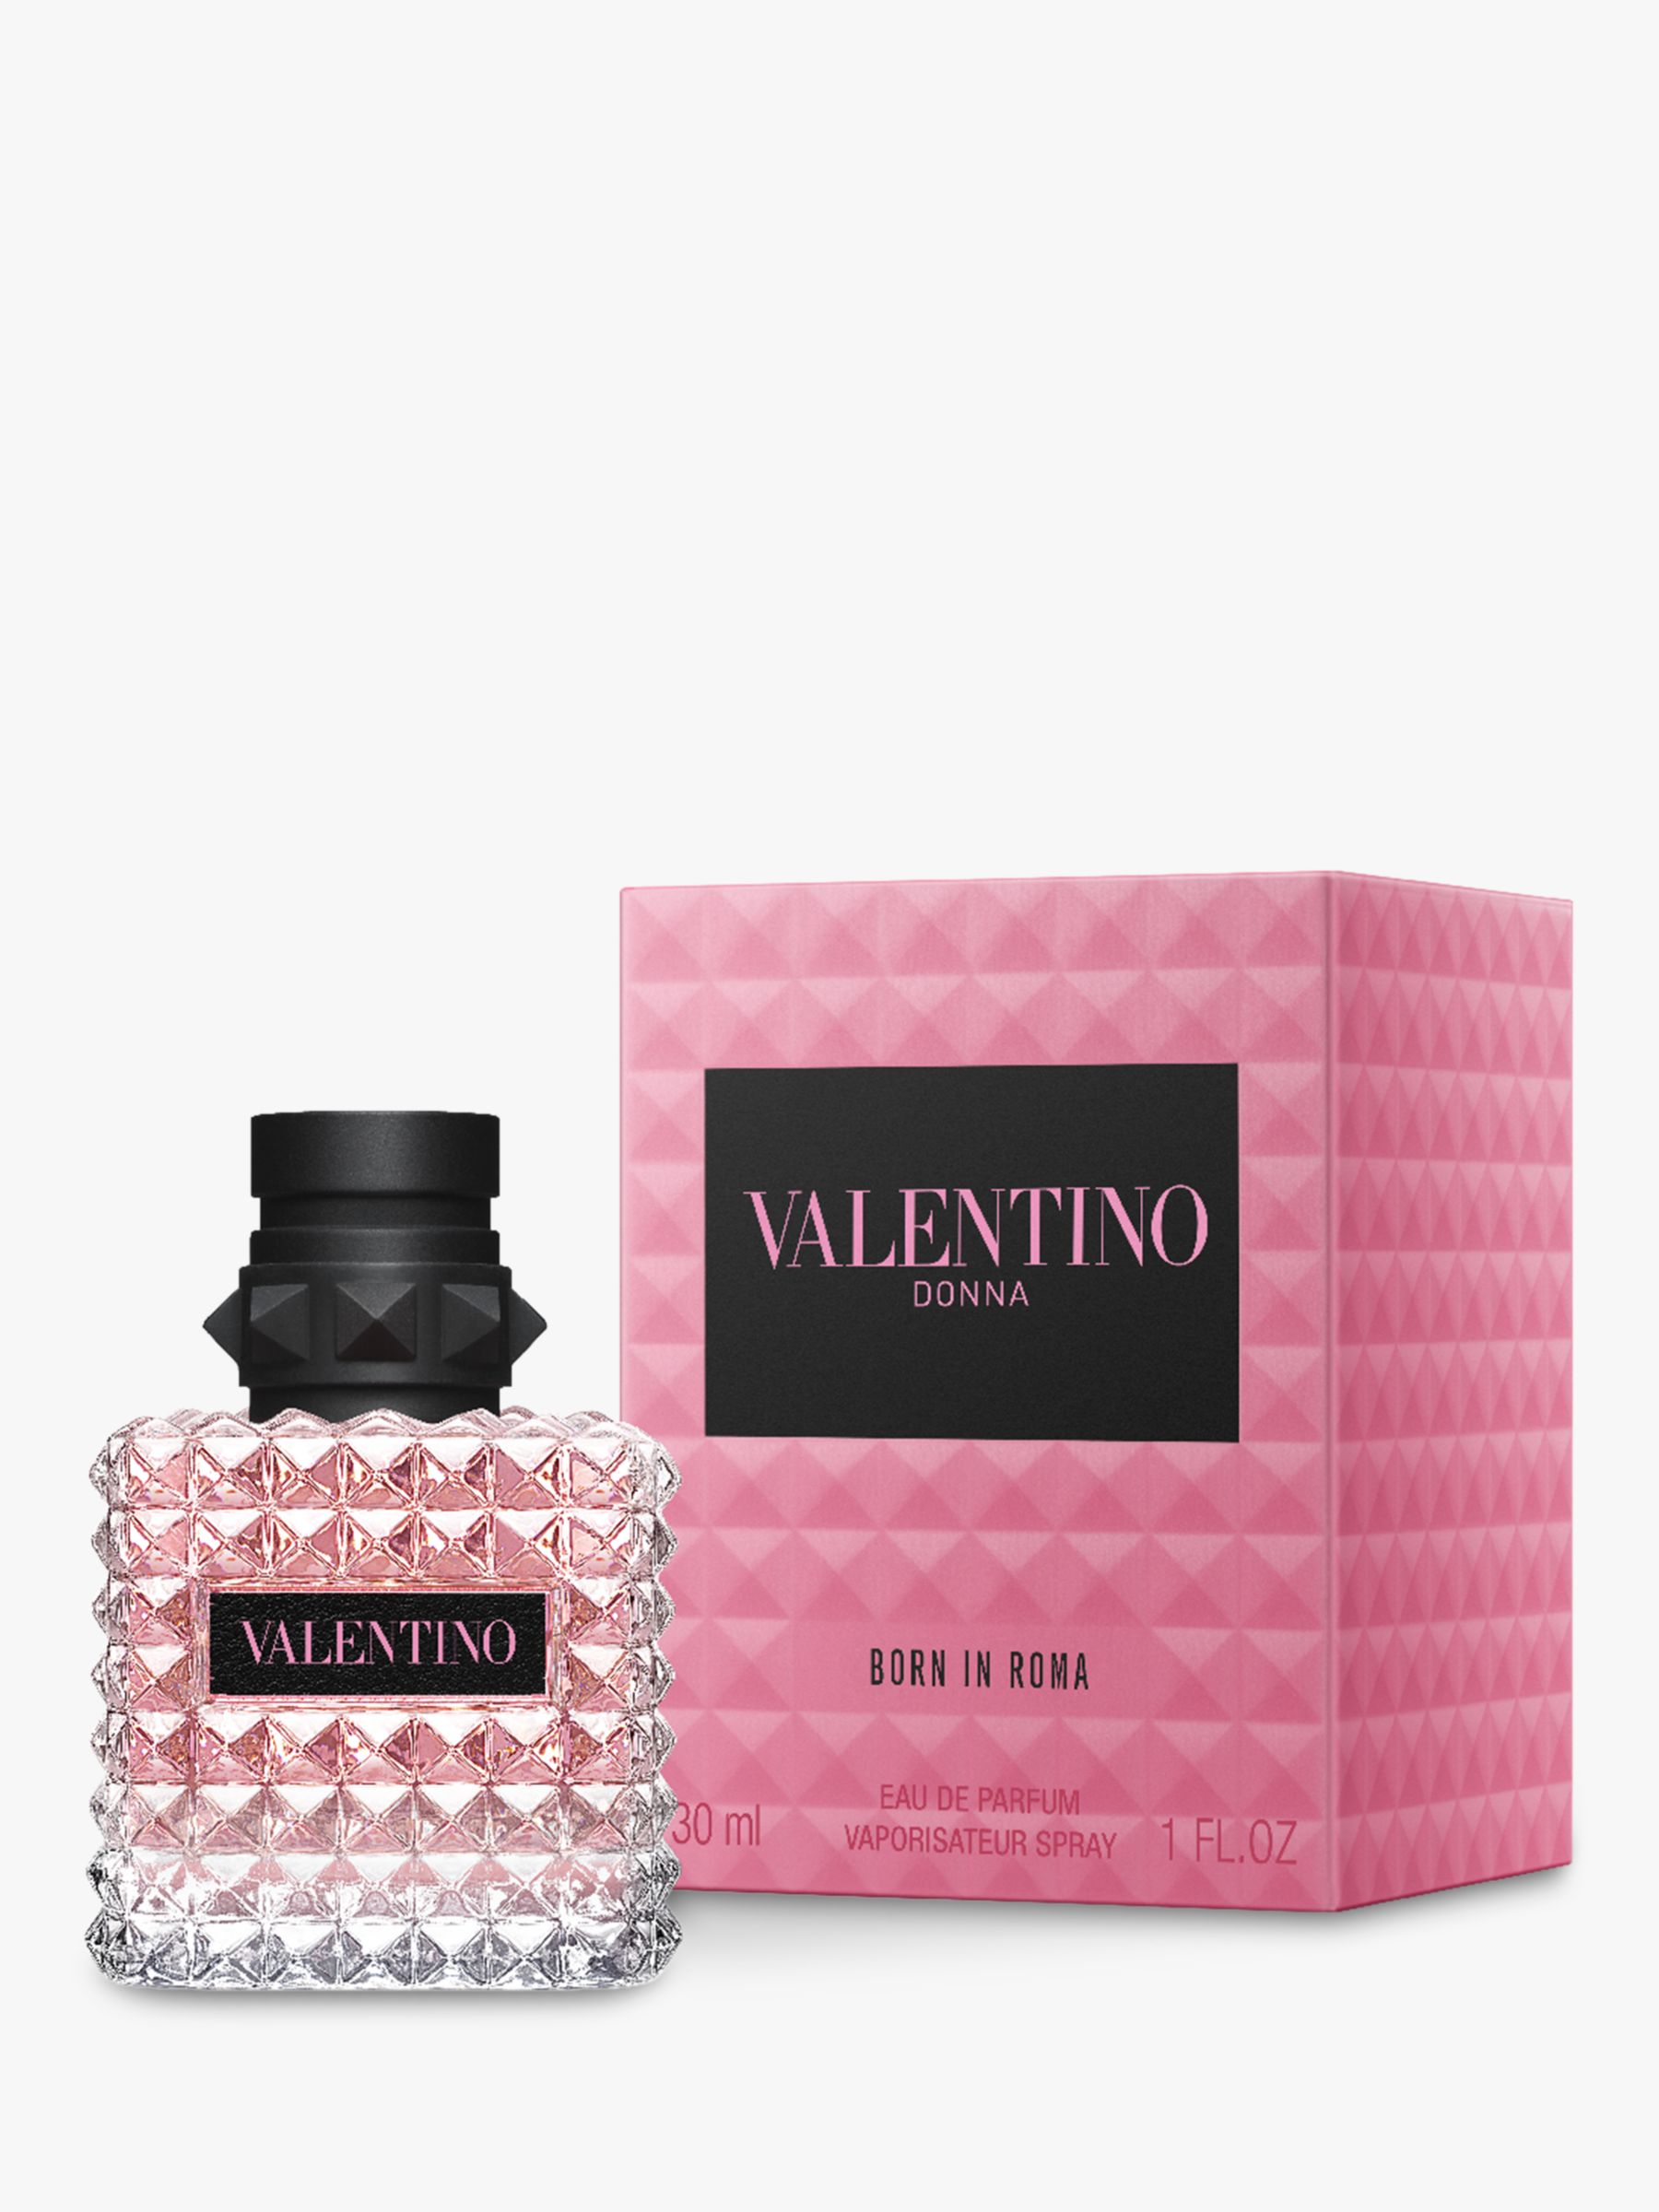 Valentino Born In Roma Donna Eau de Parfum at John Lewis & Partners